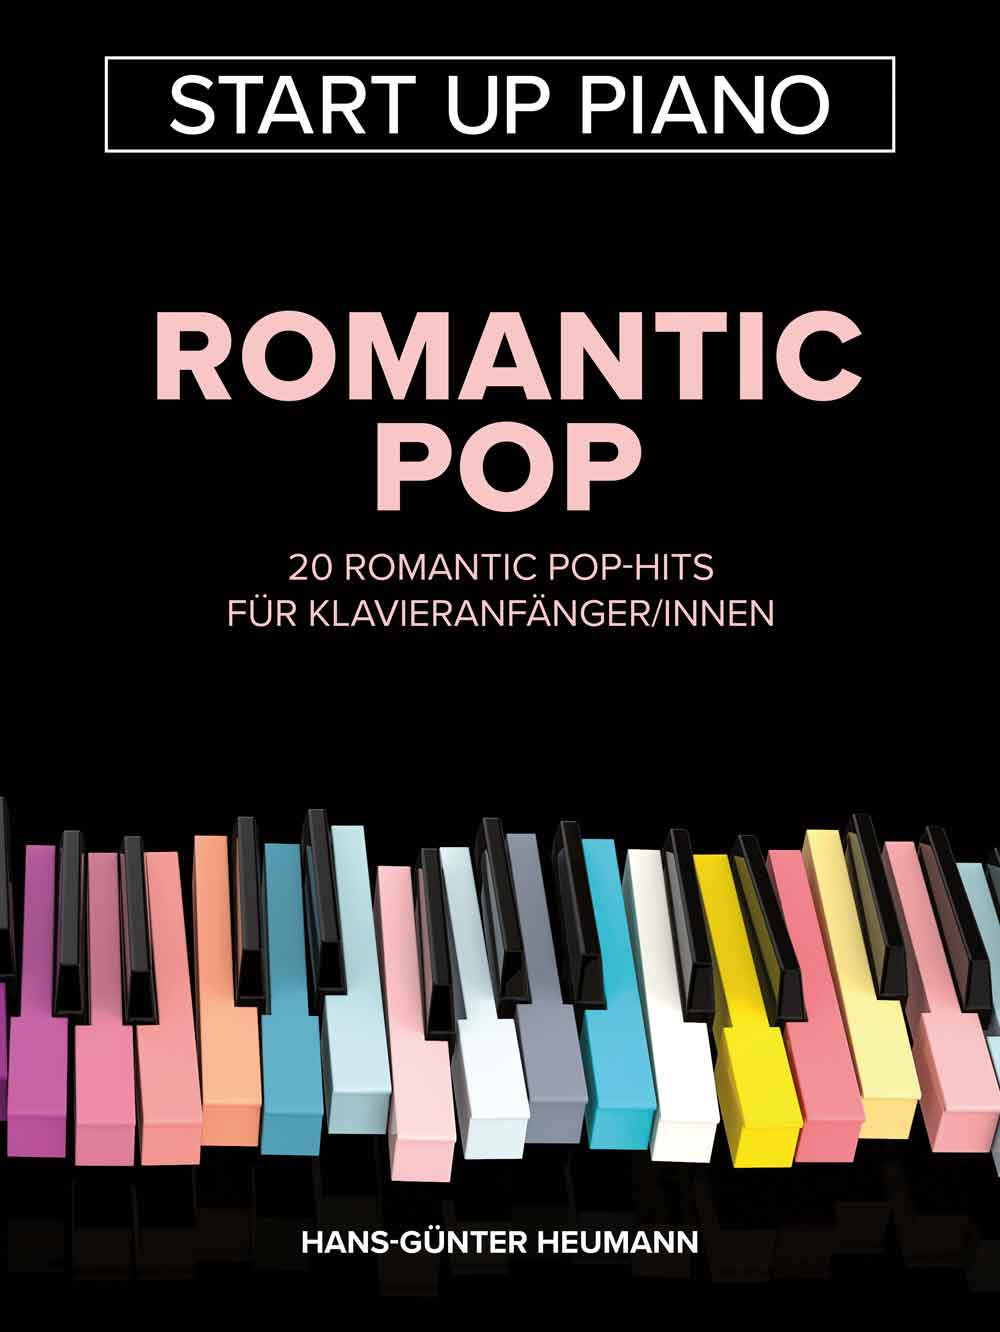 Start Up Piano - Romantic Pop: 20 Romantic Pop-Hits für Klavieranfänger/innen